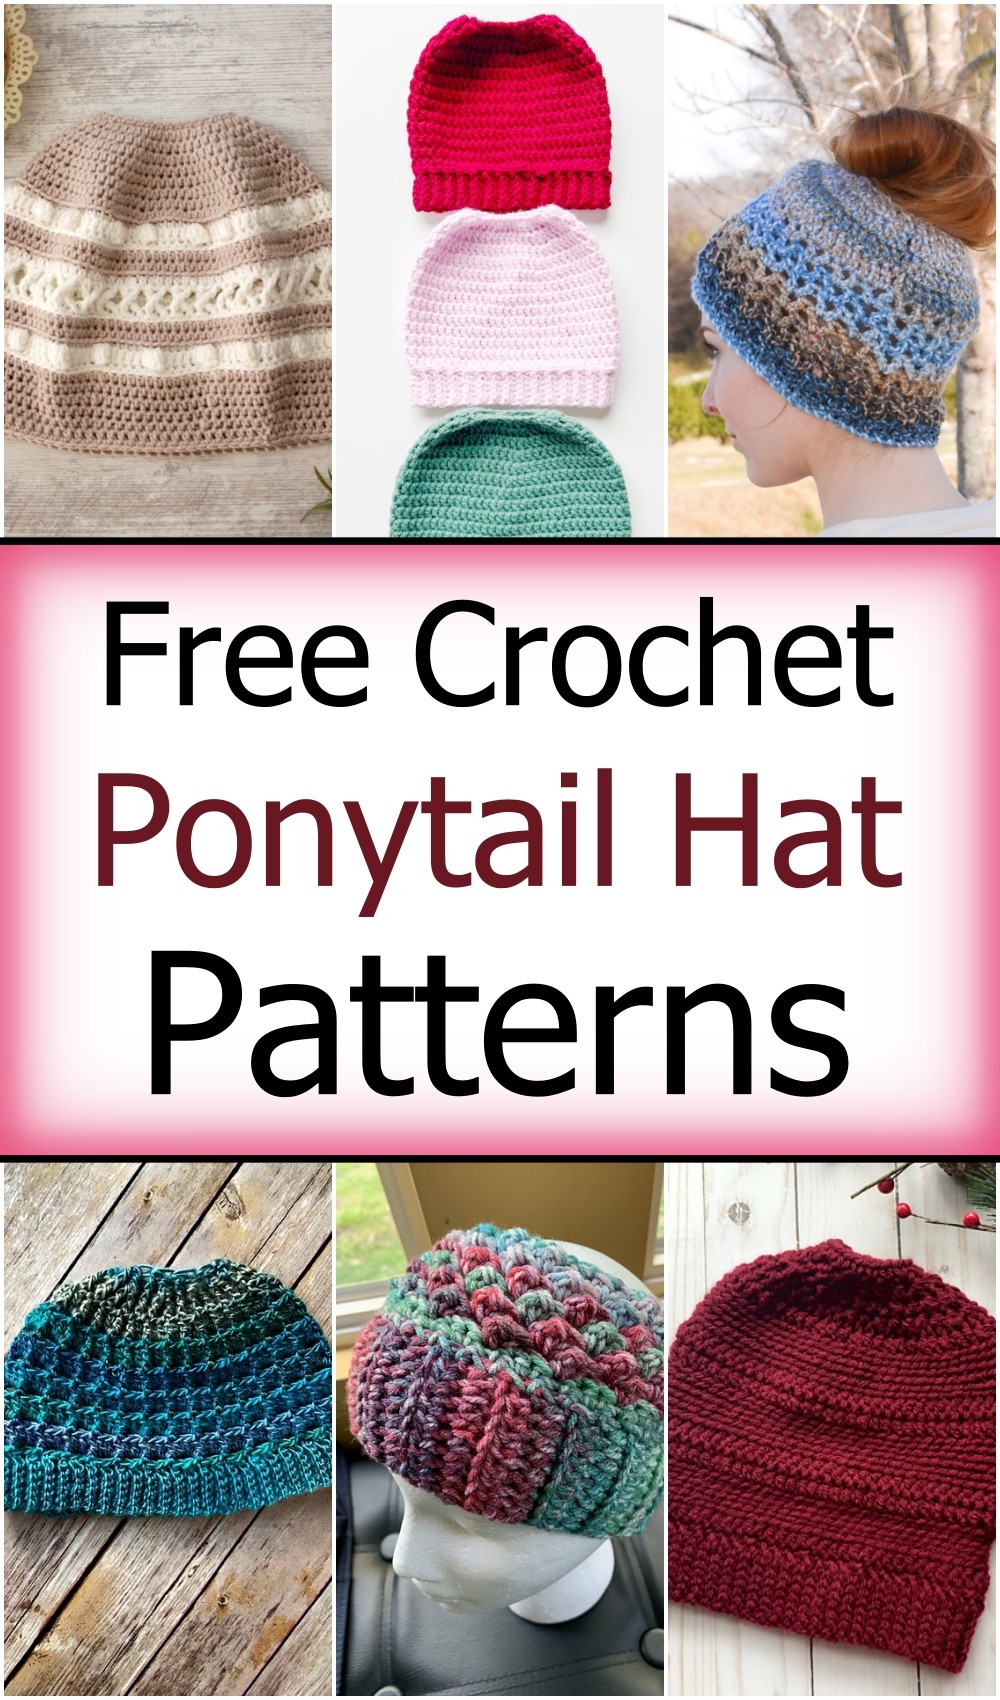 Free Crochet Ponytail Hat Patterns